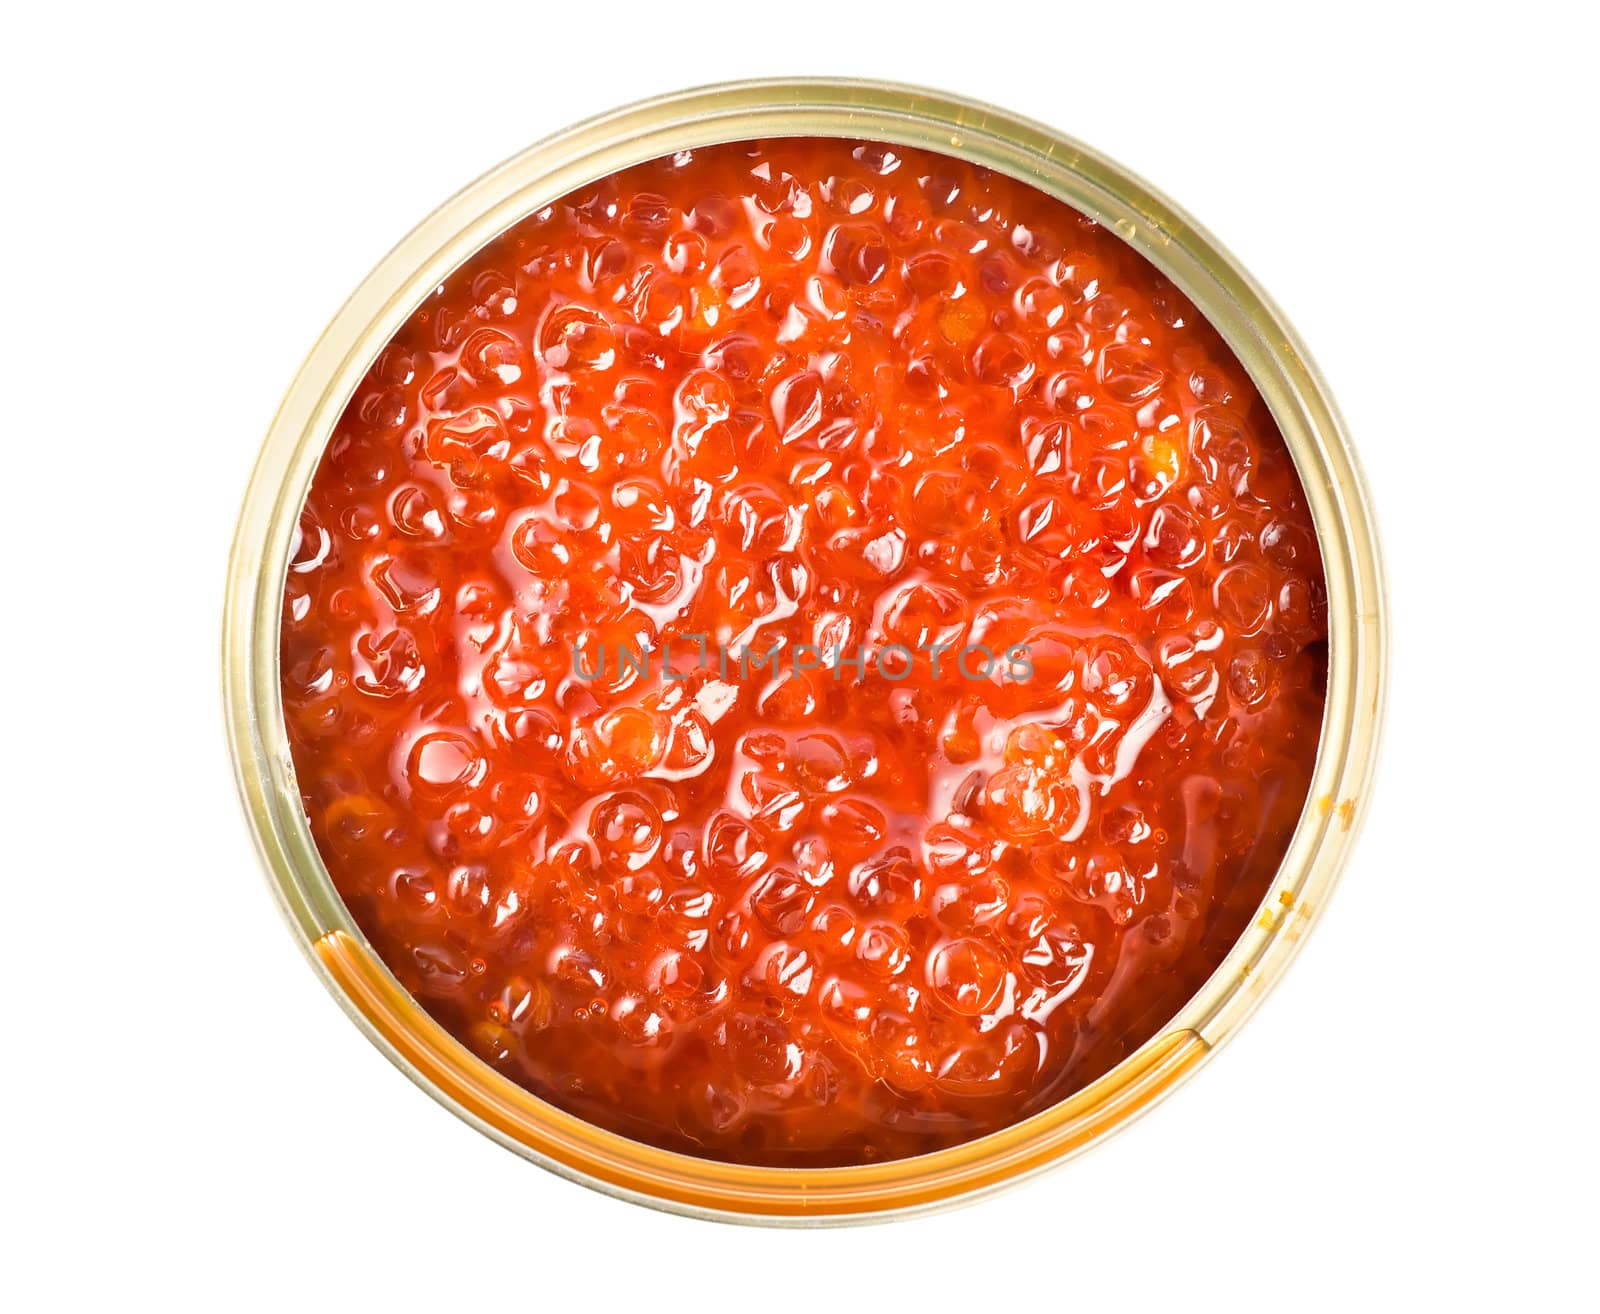 Red caviar in tin by Givaga